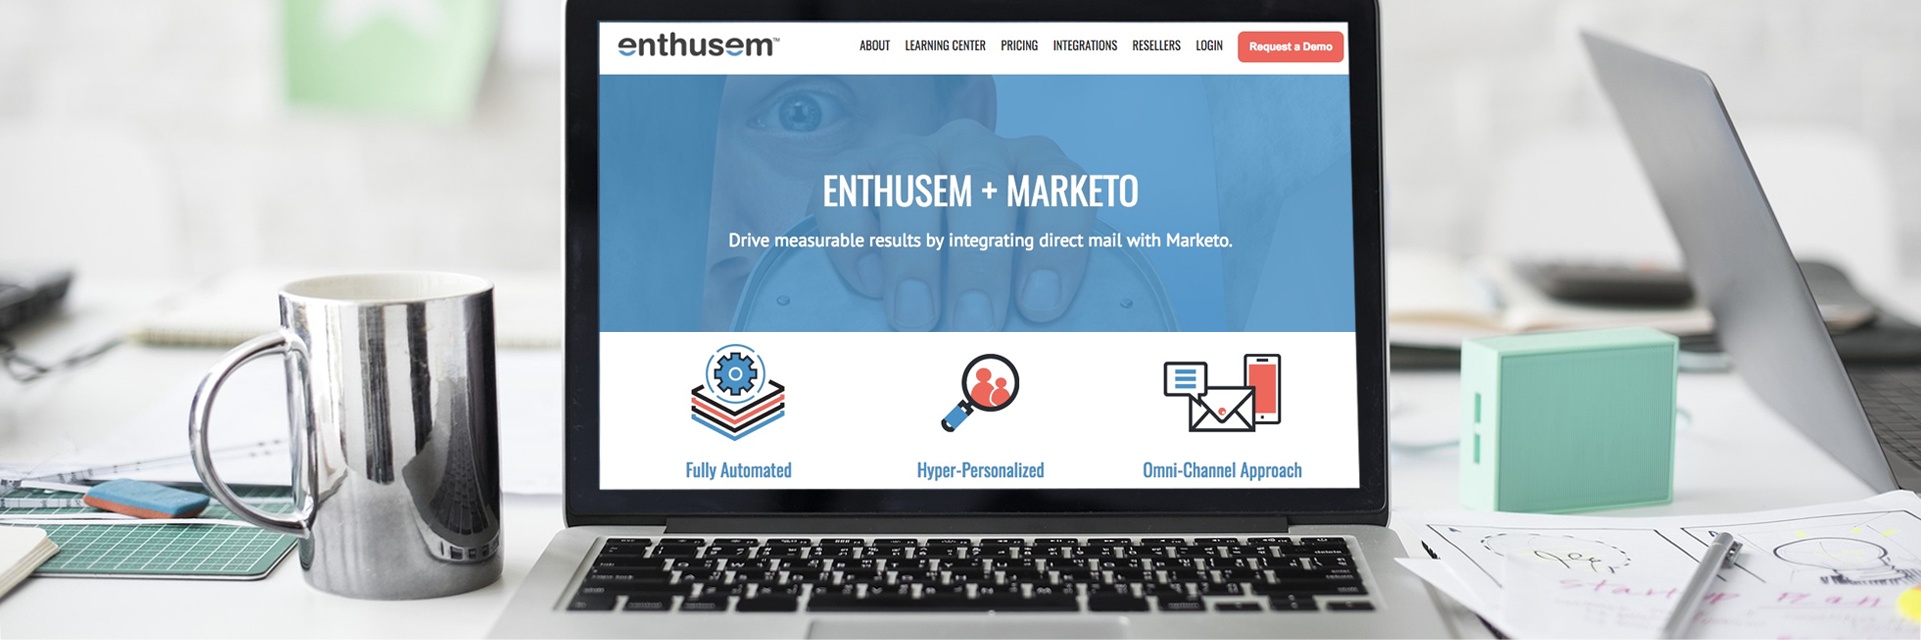 Enthusem Announces Partnership with Marketo®